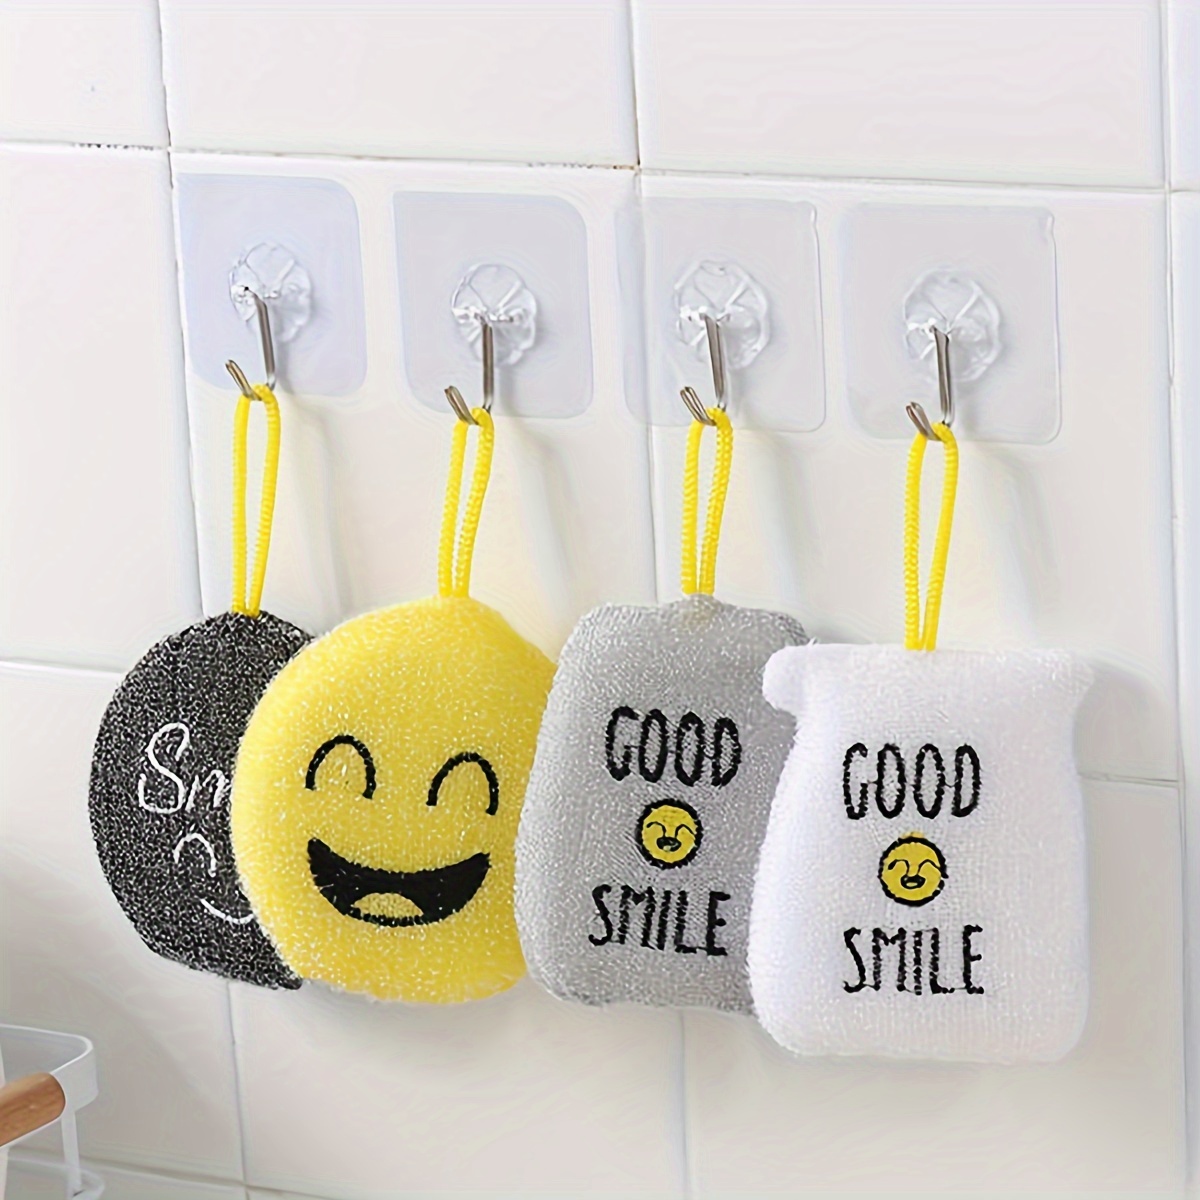 4pcs Cartoon Smiling Face Dishwashing Sponge Wipe Non Scratch